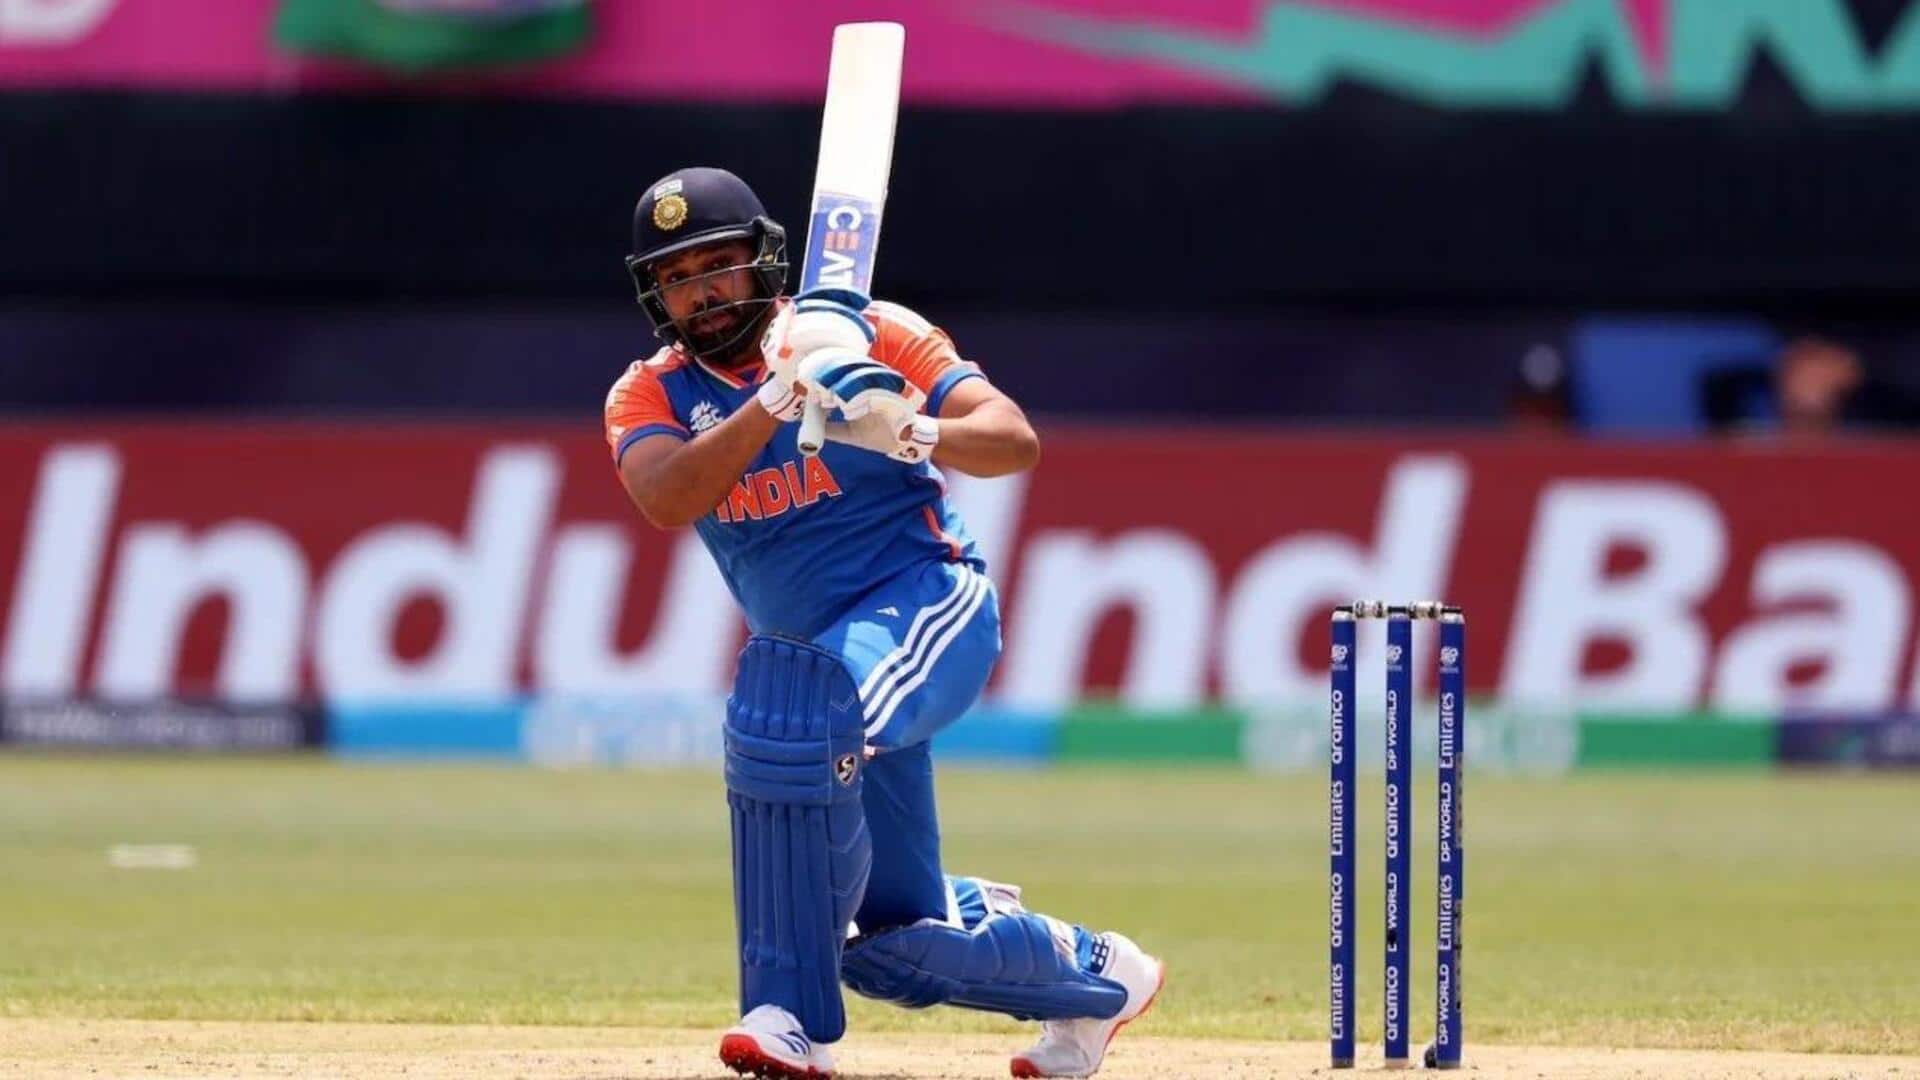 ICC T20 World Cup, India vs Pakistan: Key player battles